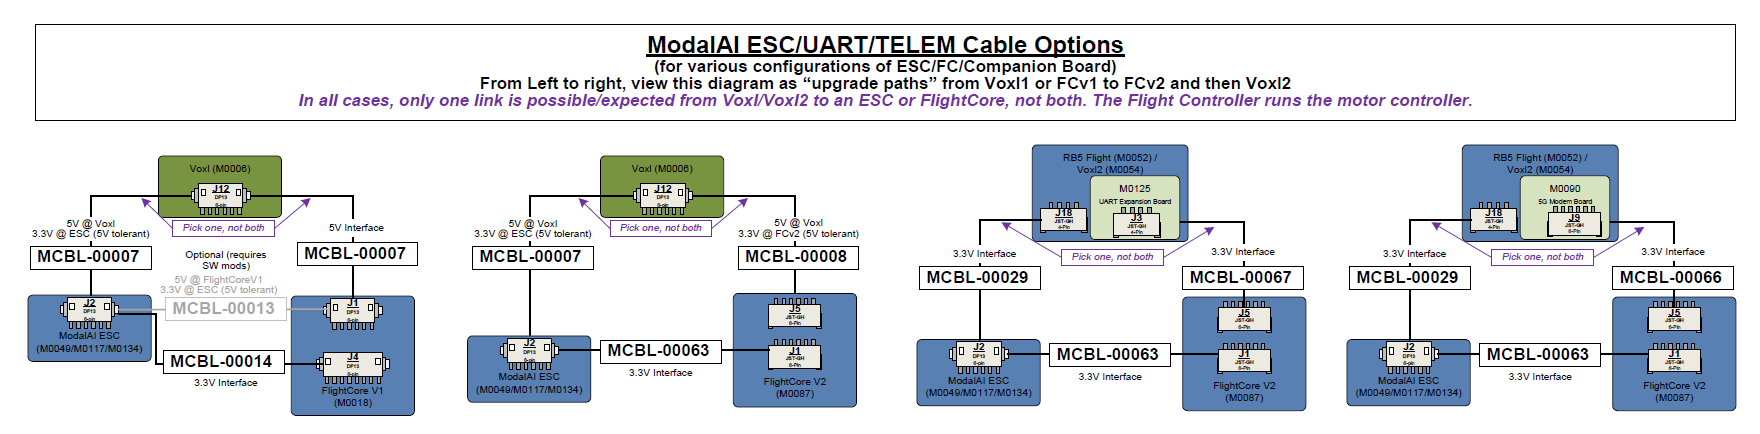 ESC-UART Cable Guide